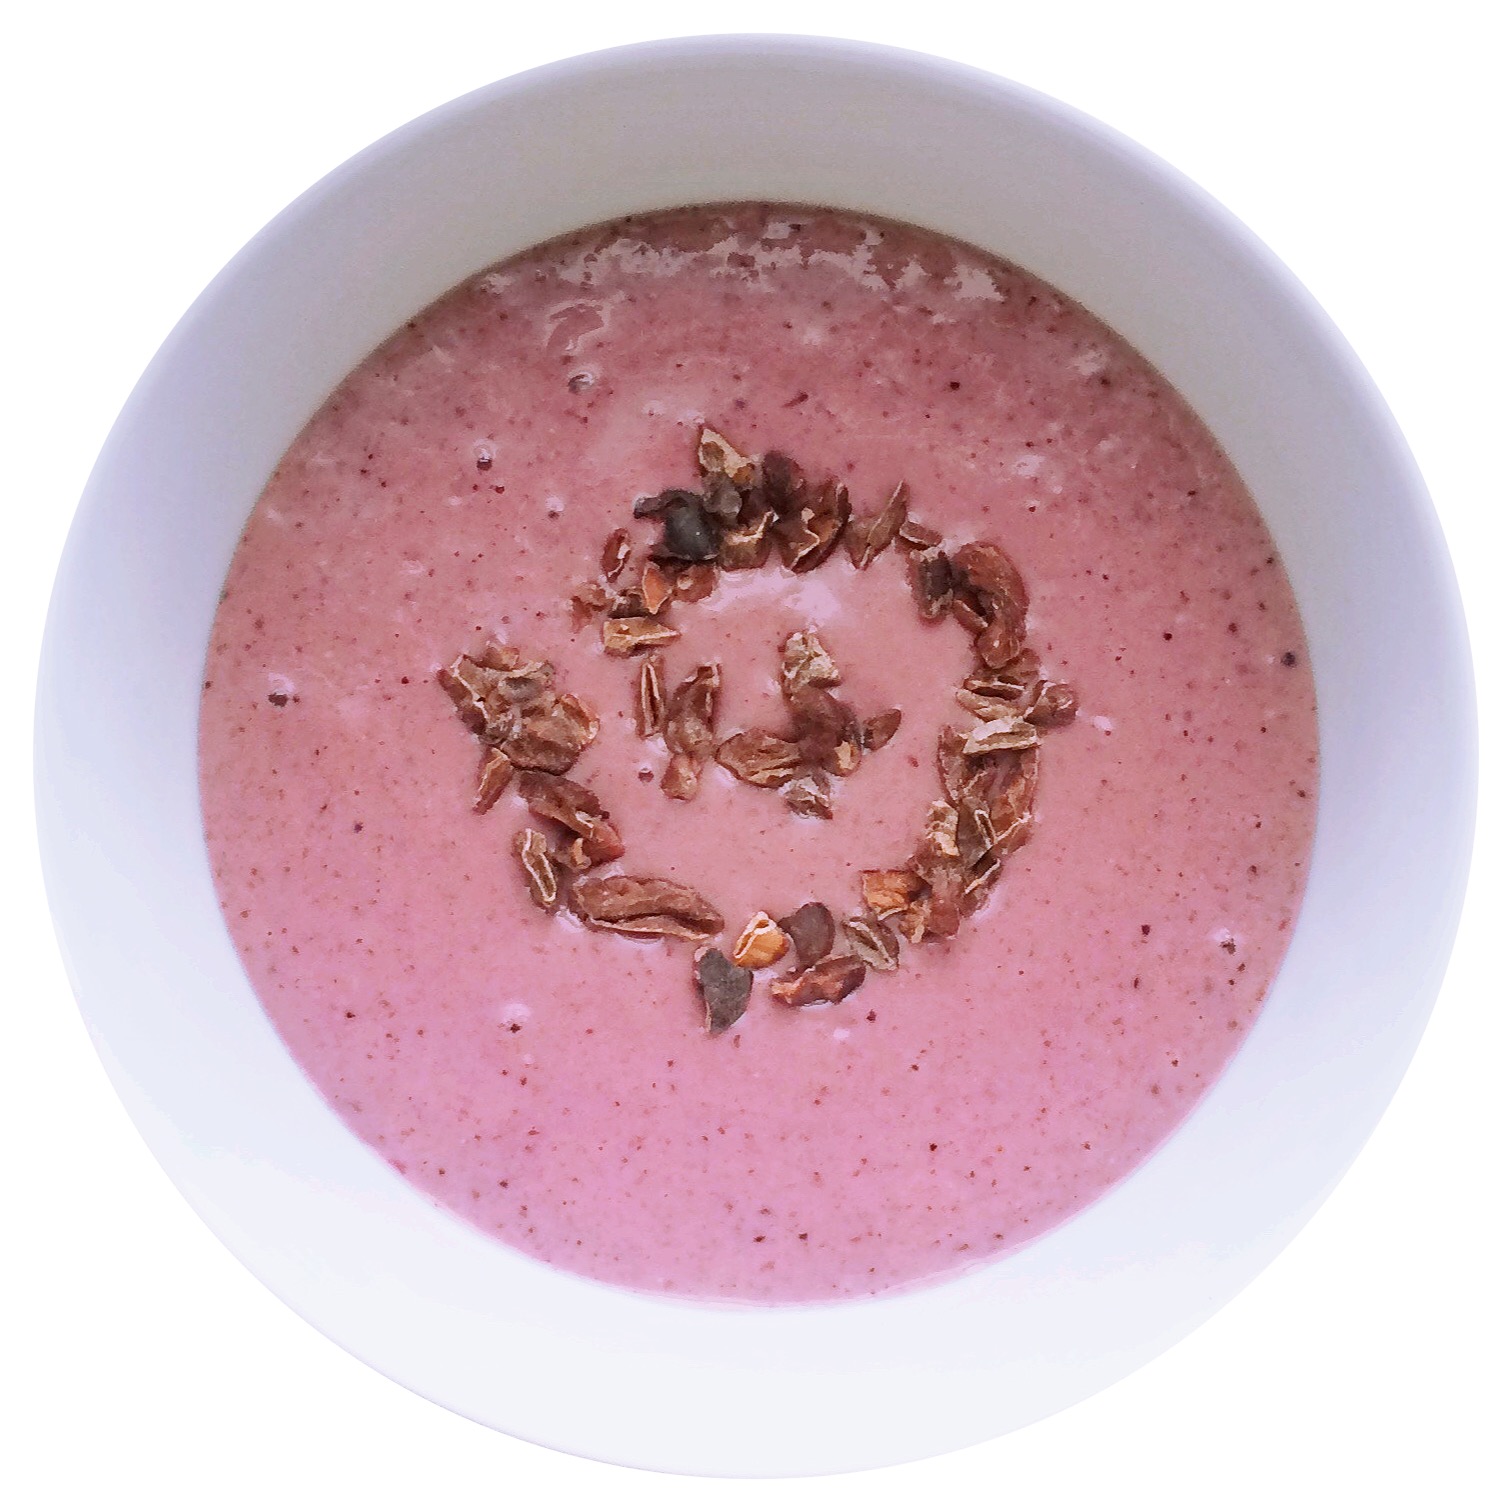 Pink smoothie bowl with circle design